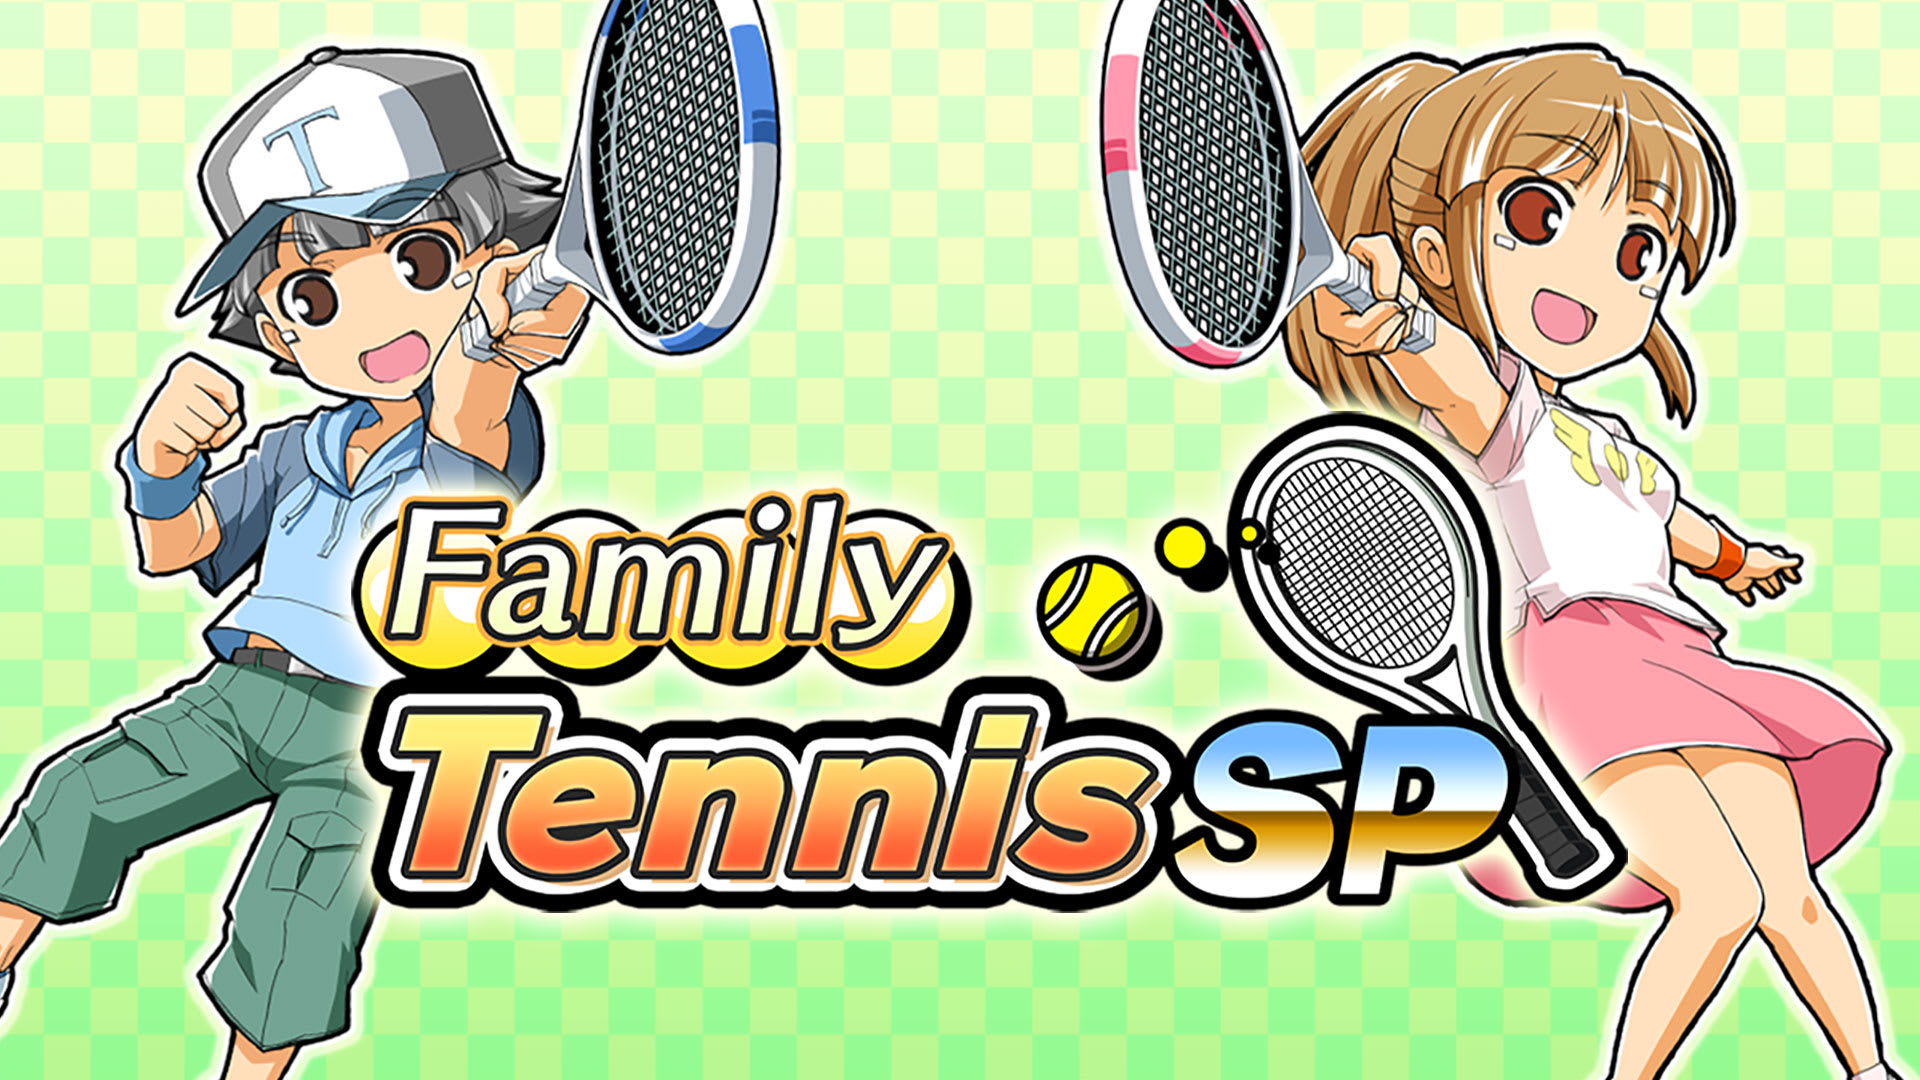 Family Tennis SP